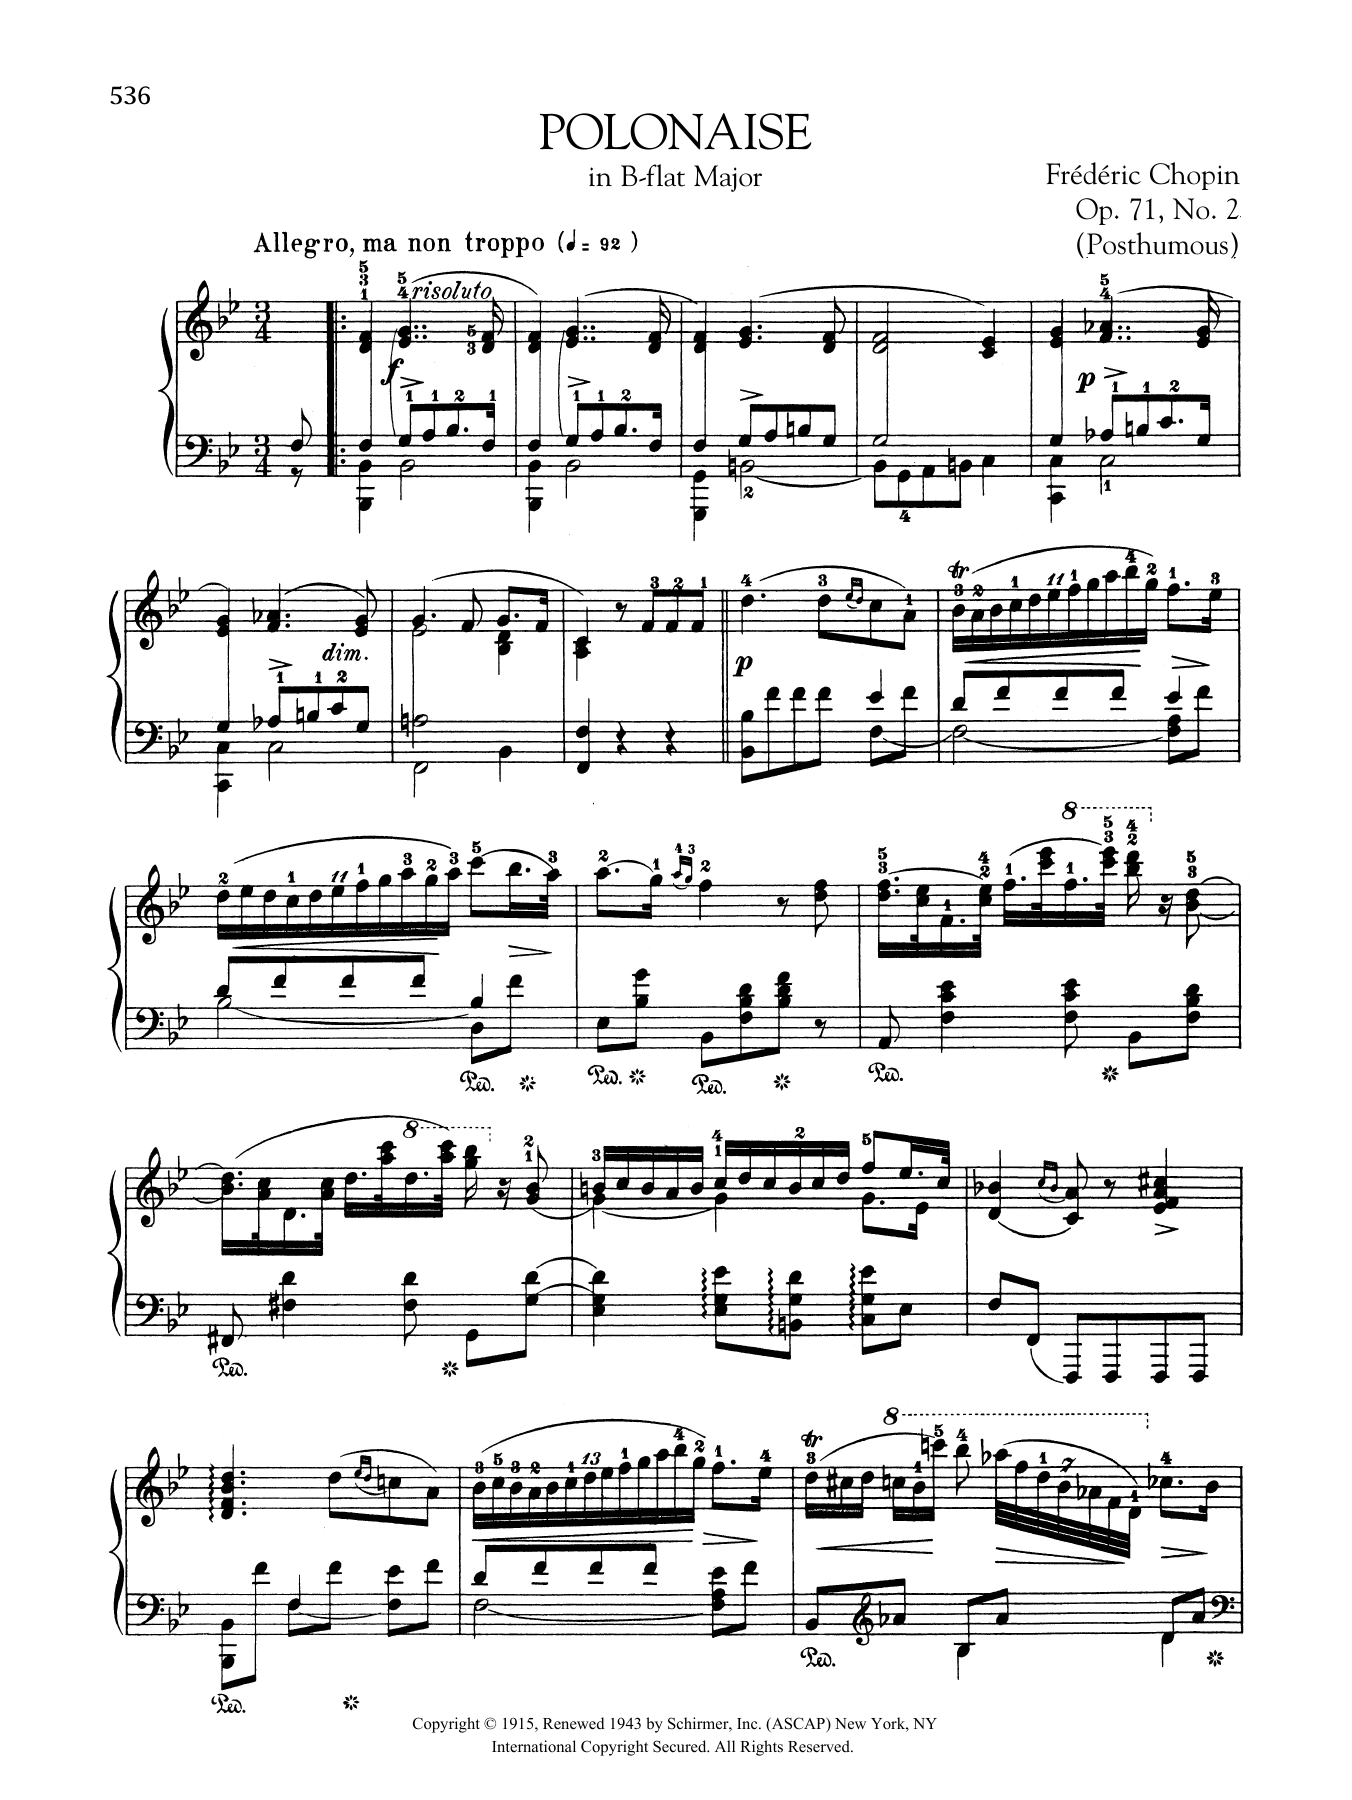 Download Frederic Chopin Polonaise in B-flat Major, Op. 71, No. Sheet Music